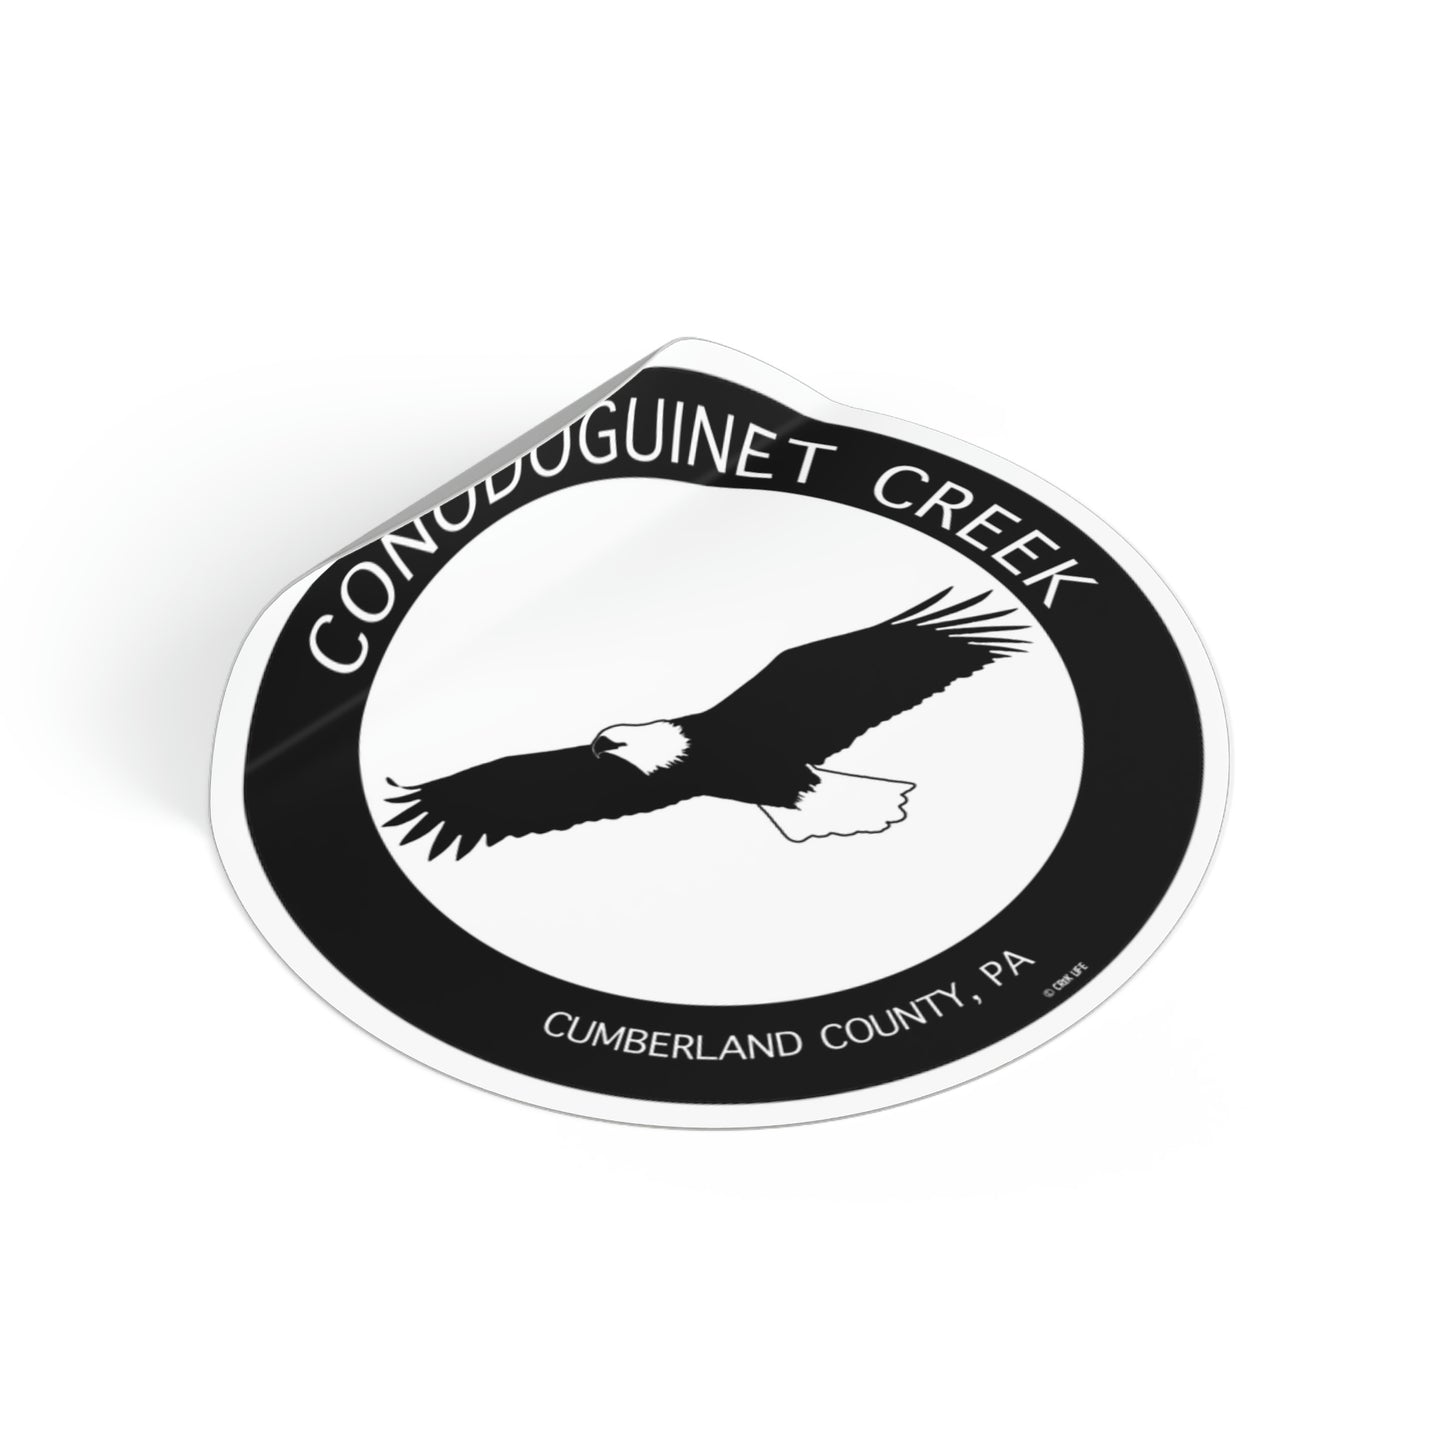 Conodoguinet Eagle Sticker by Crēk Life